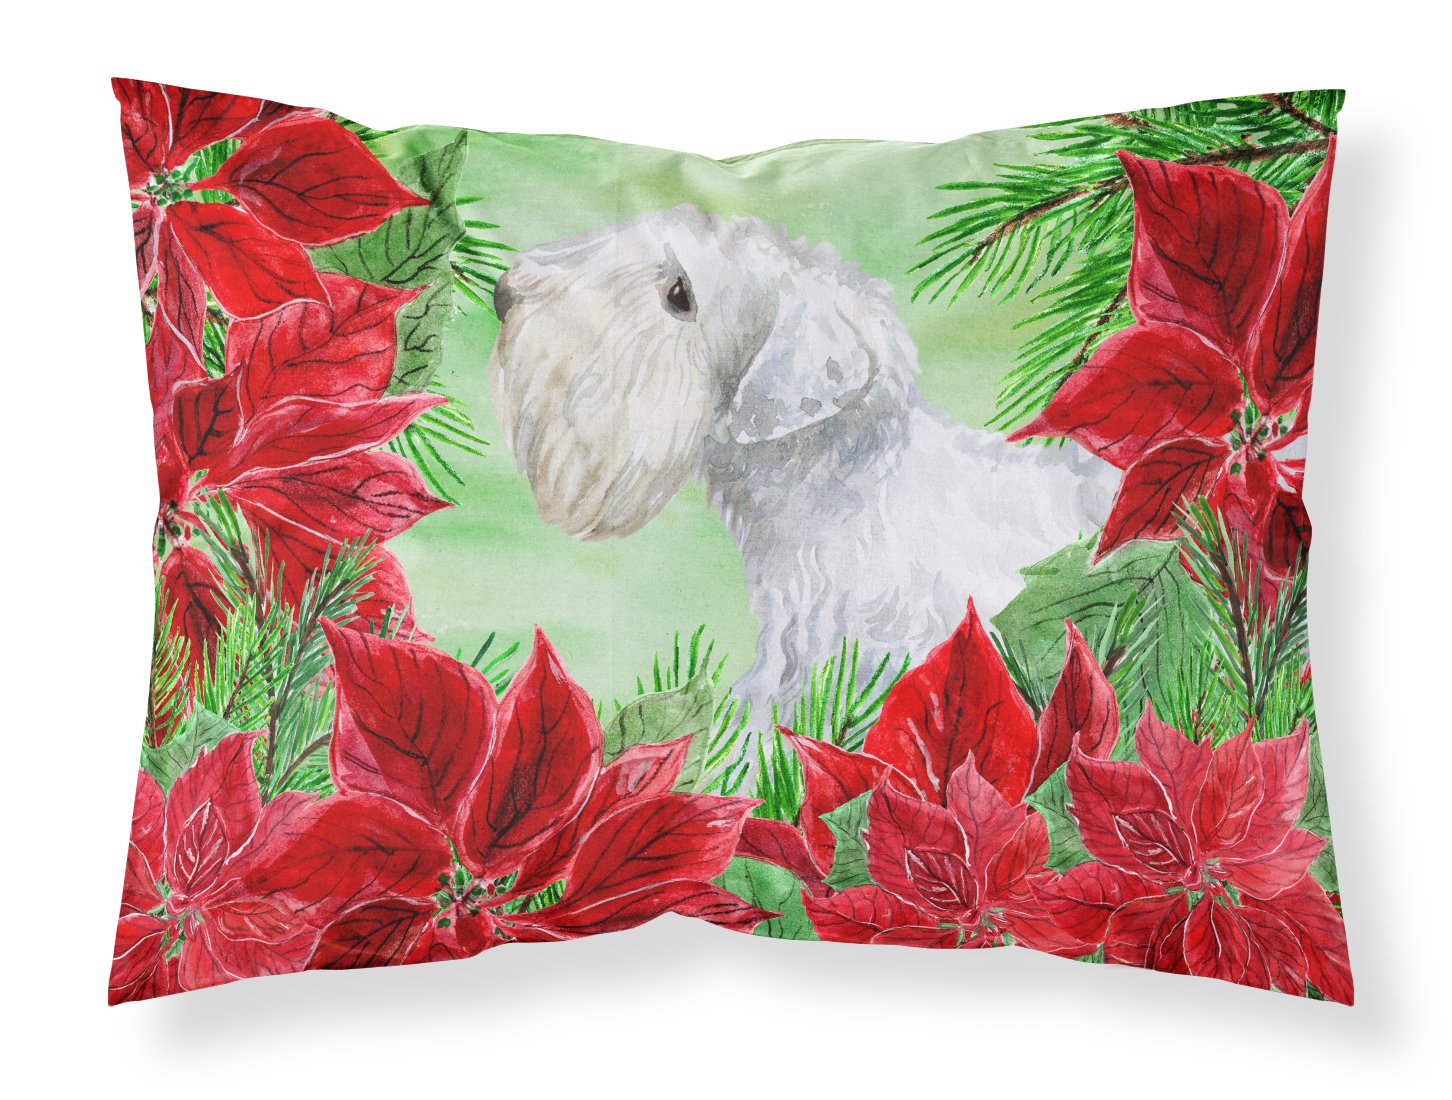 Sealyham Terrier Poinsettas Fabric Standard Pillowcase CK1332PILLOWCASE by Caroline's Treasures